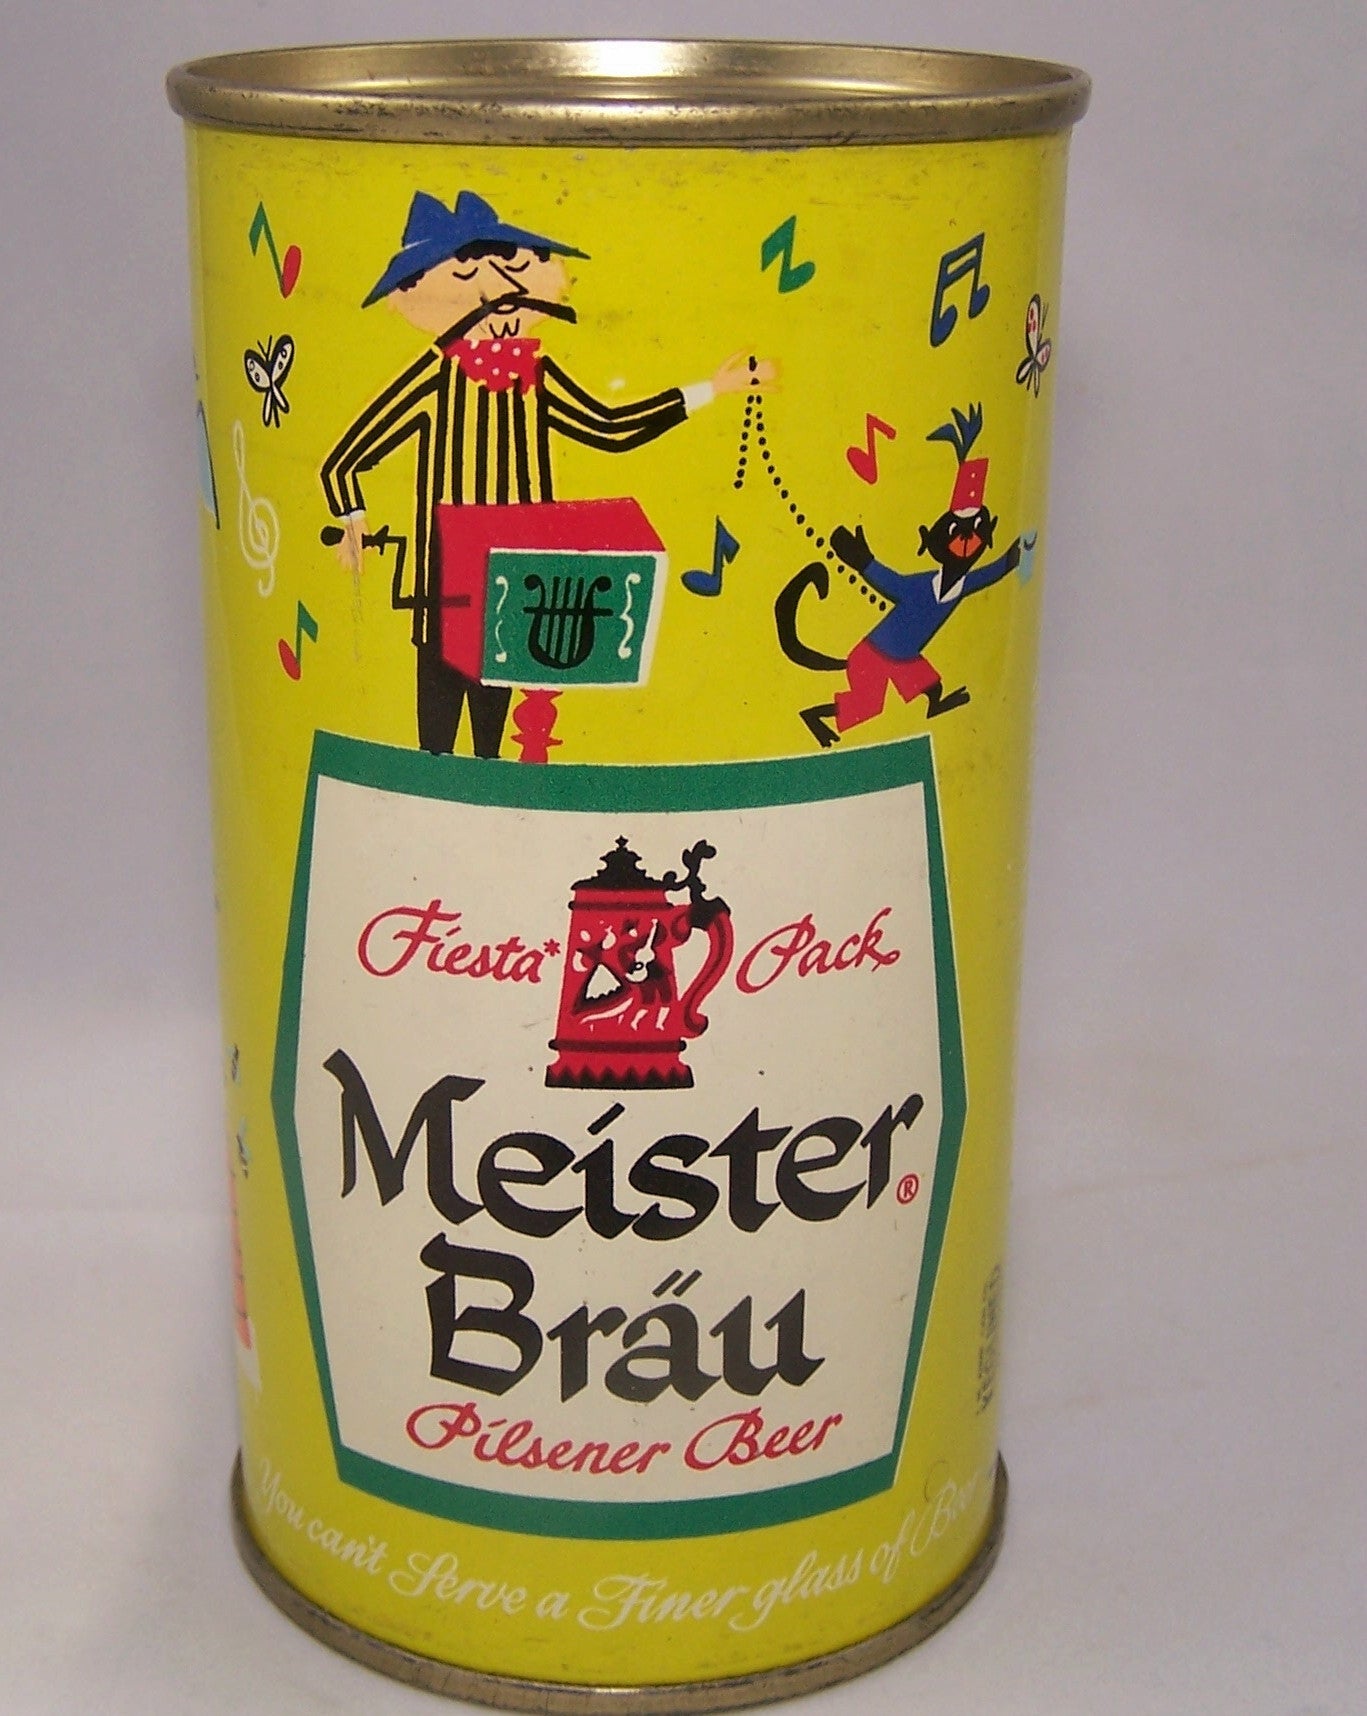 Meister Brau Fiesta Pack, USBC 98-7, Grade A1+ Sold on 9/10/15